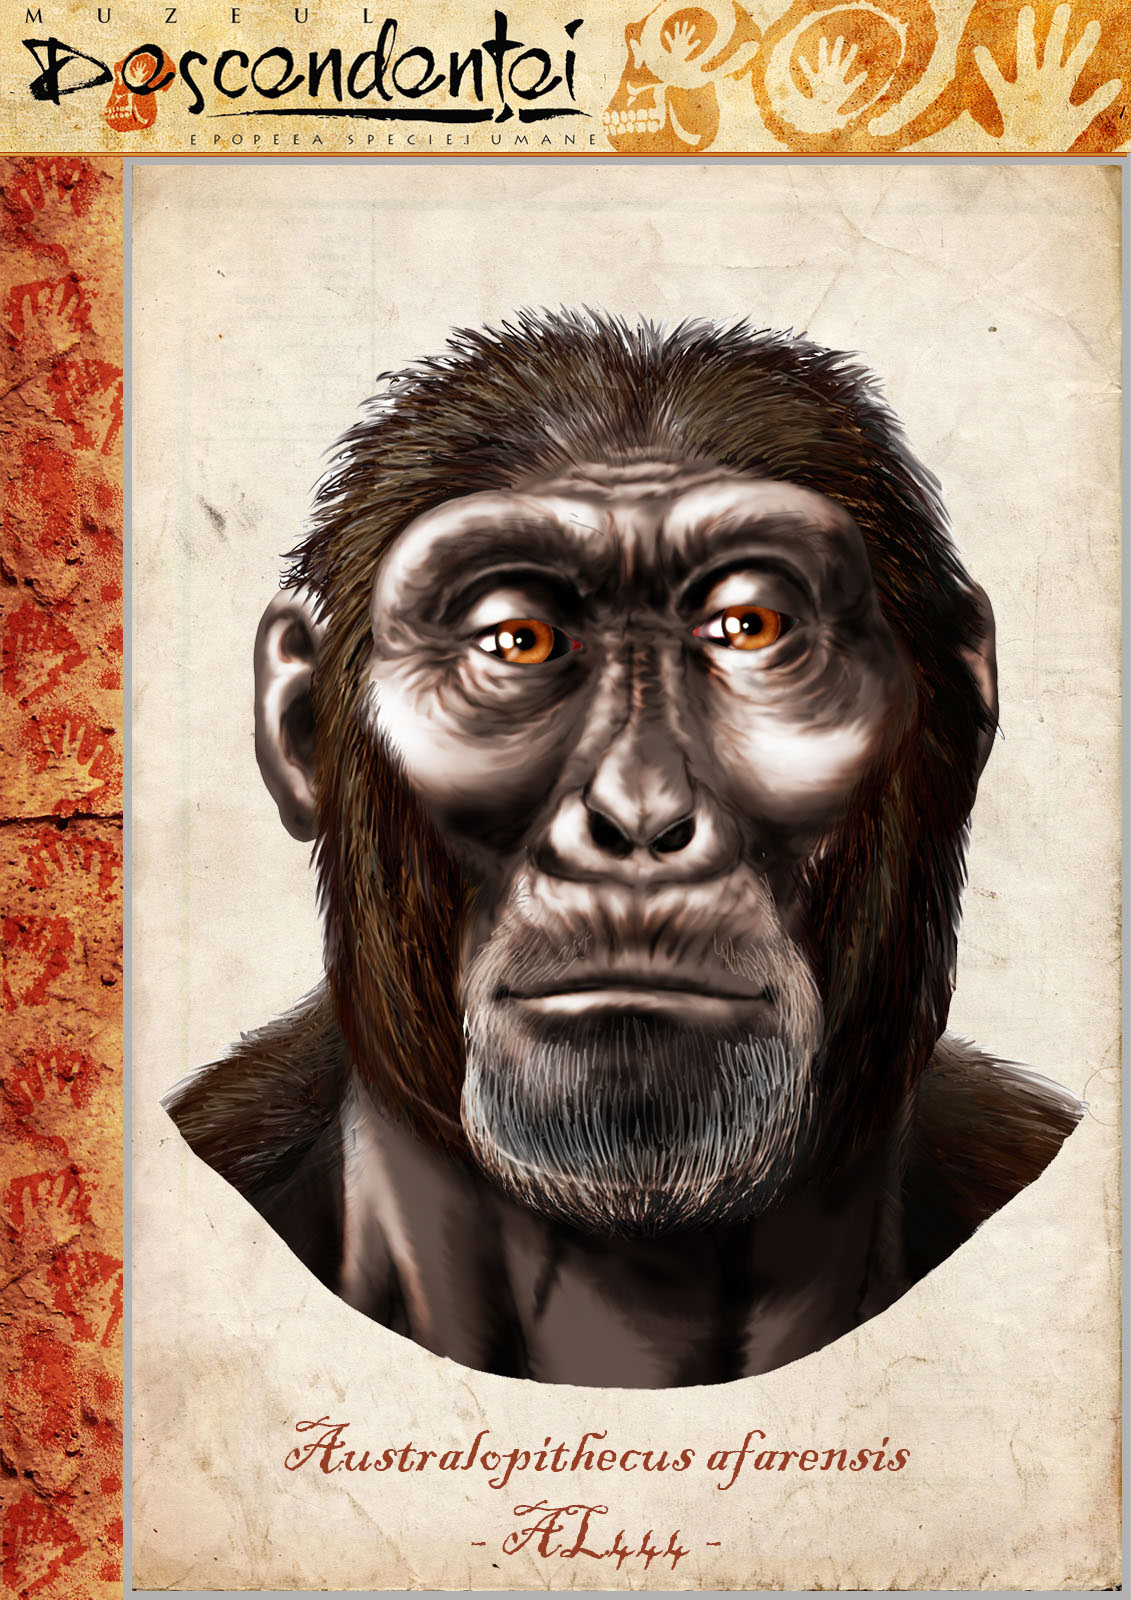 australopithecus afarensis human evolution hominid homo sahelanthropus ardipithecus kenyanthropus paranthropus habilis ergaster erectus floresiensis antecessor